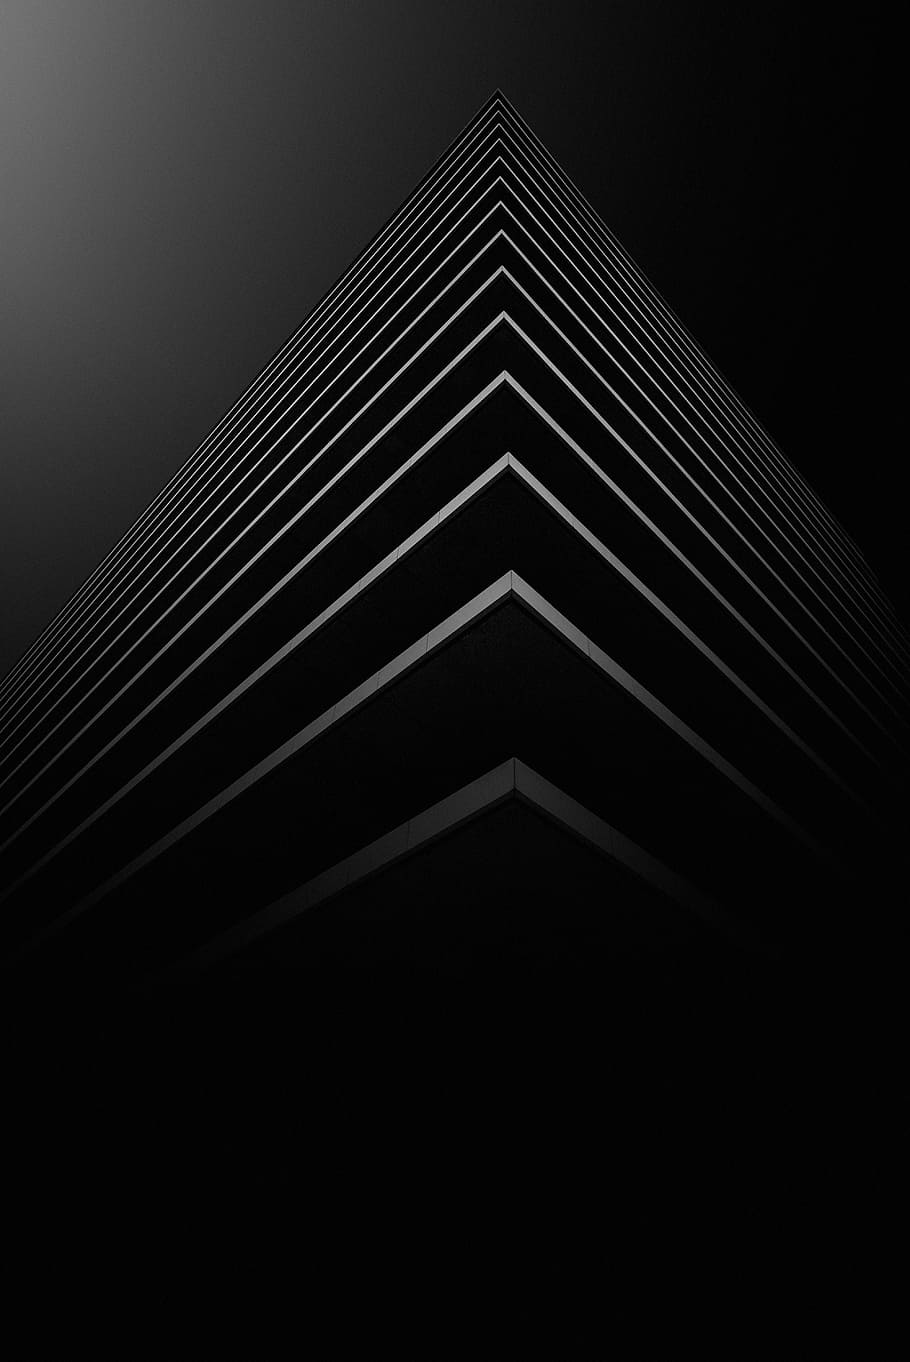 HD wallpaper: grey and black stack pyramid wallpaper, building